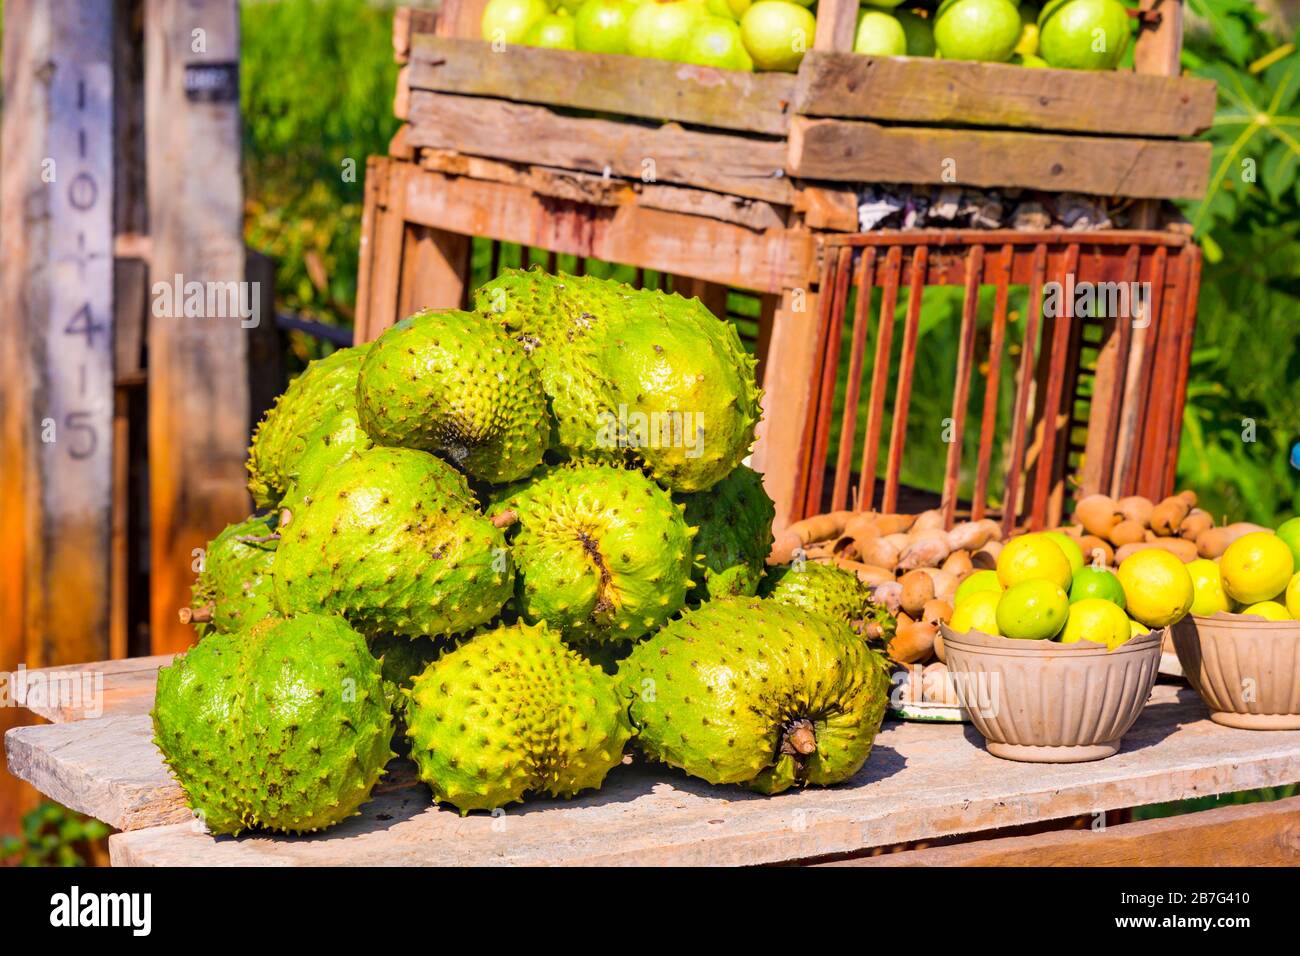 Sri Lanka Cultural Triangle Anuradhapura exotic tropical fruit stall wood boxes apples limes lemons graviola paw paw papaya roadside sugar apples Stock Photo